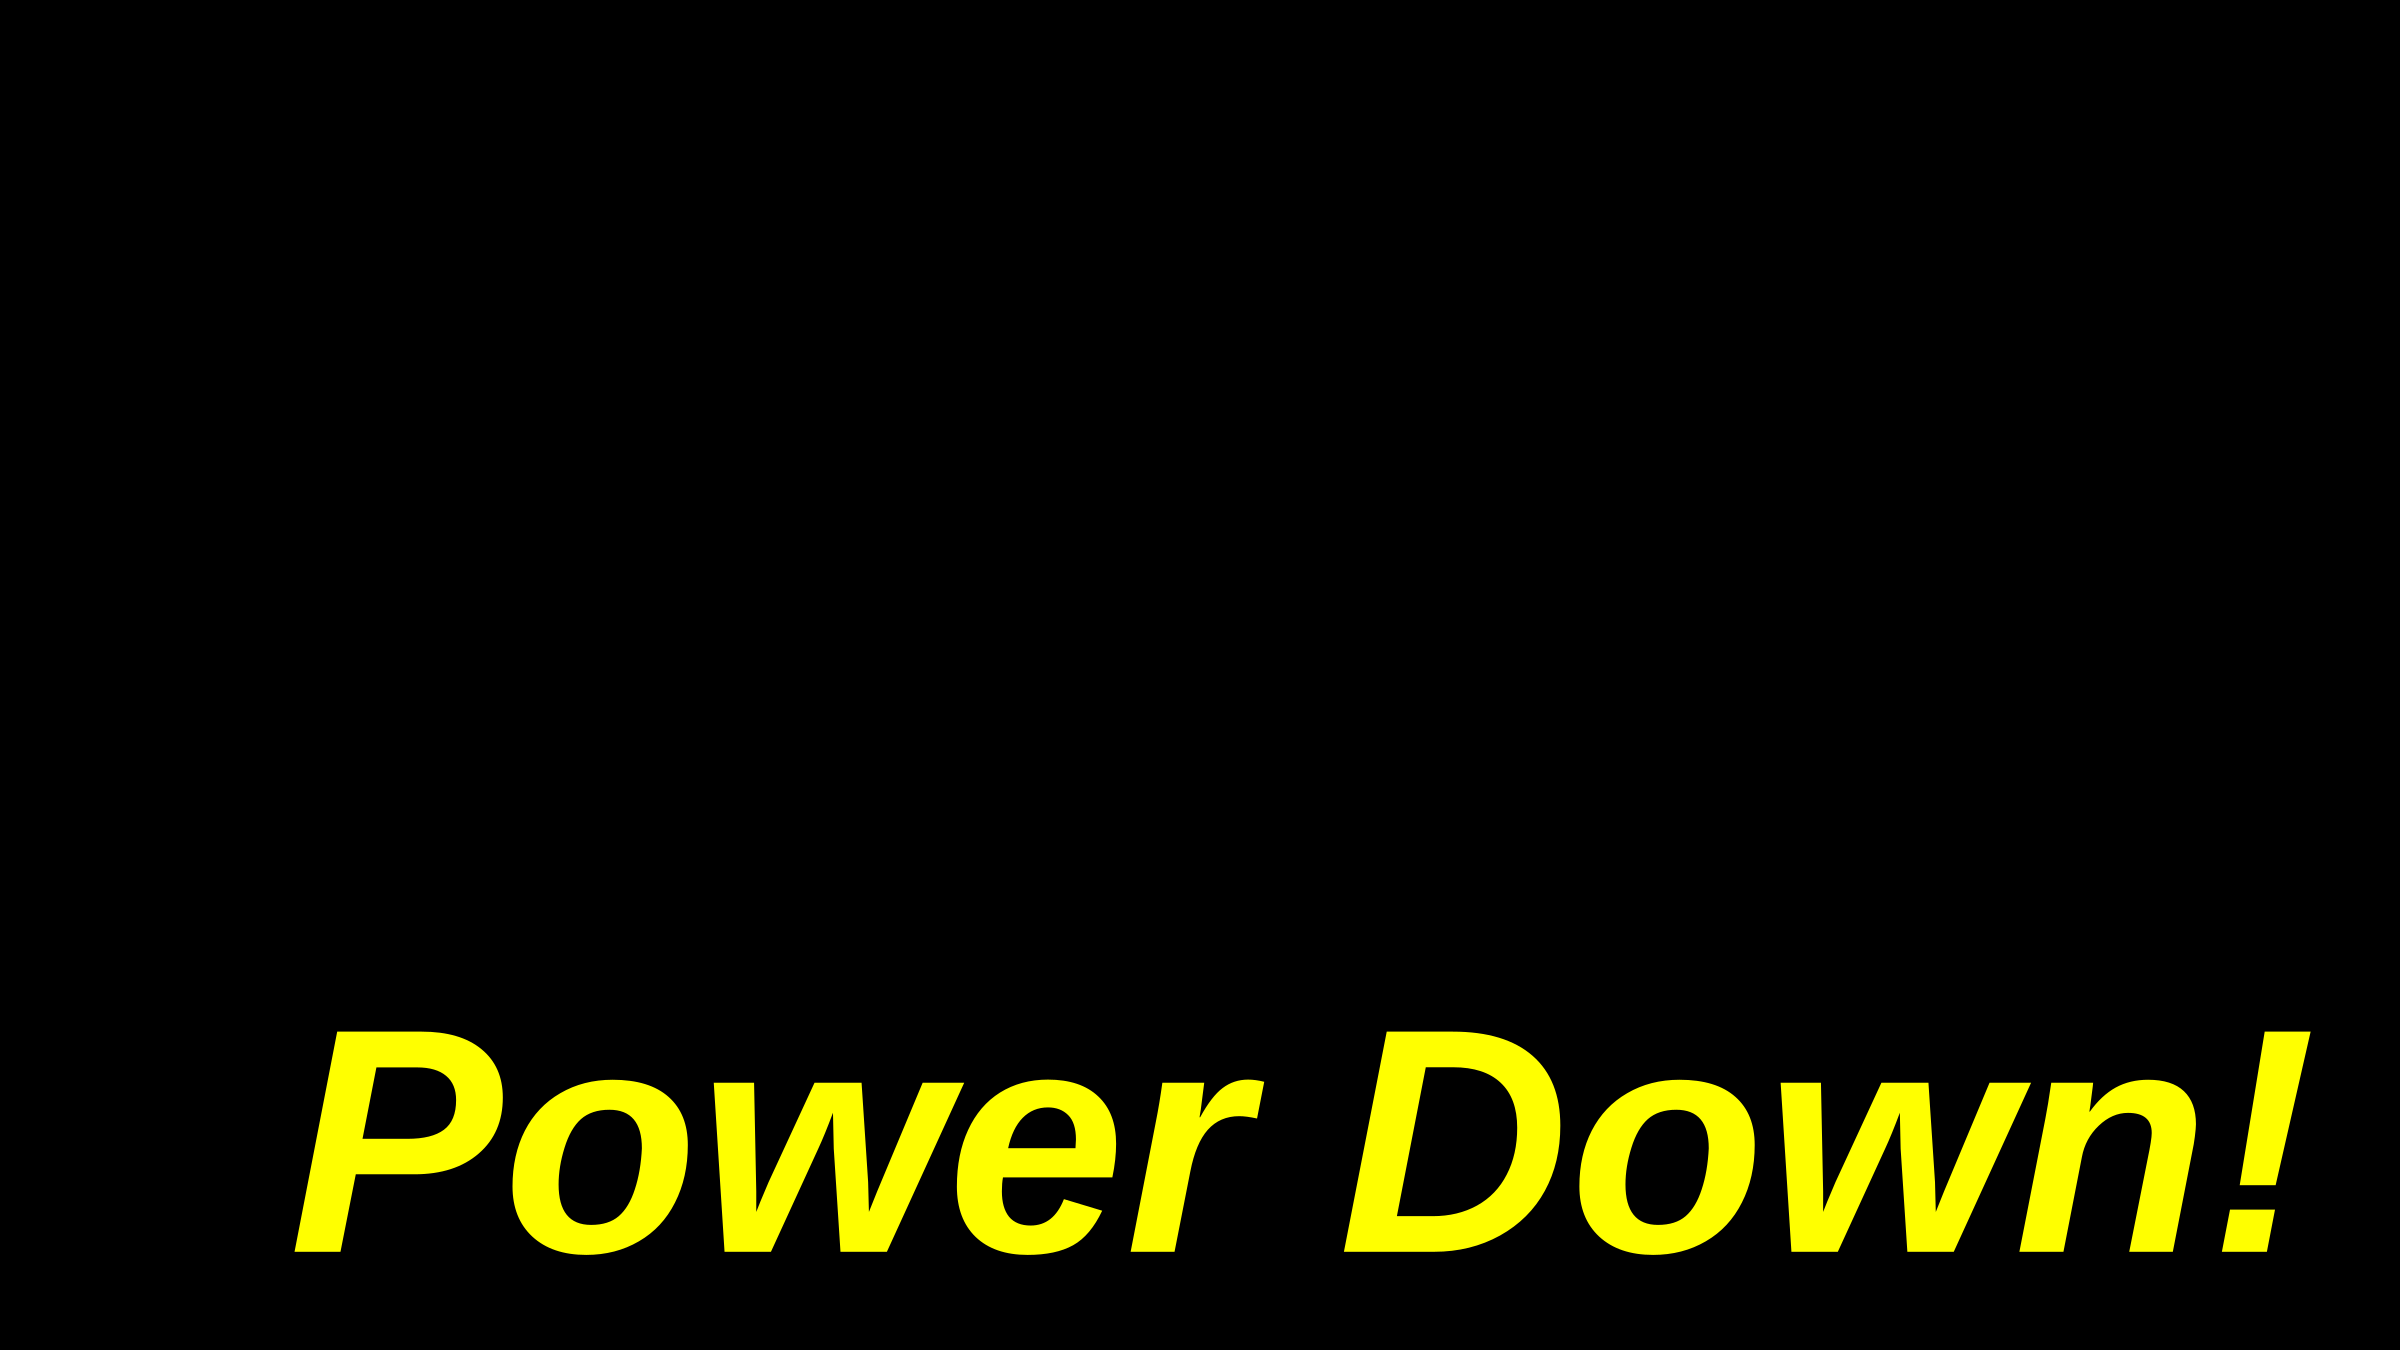 Power Down!